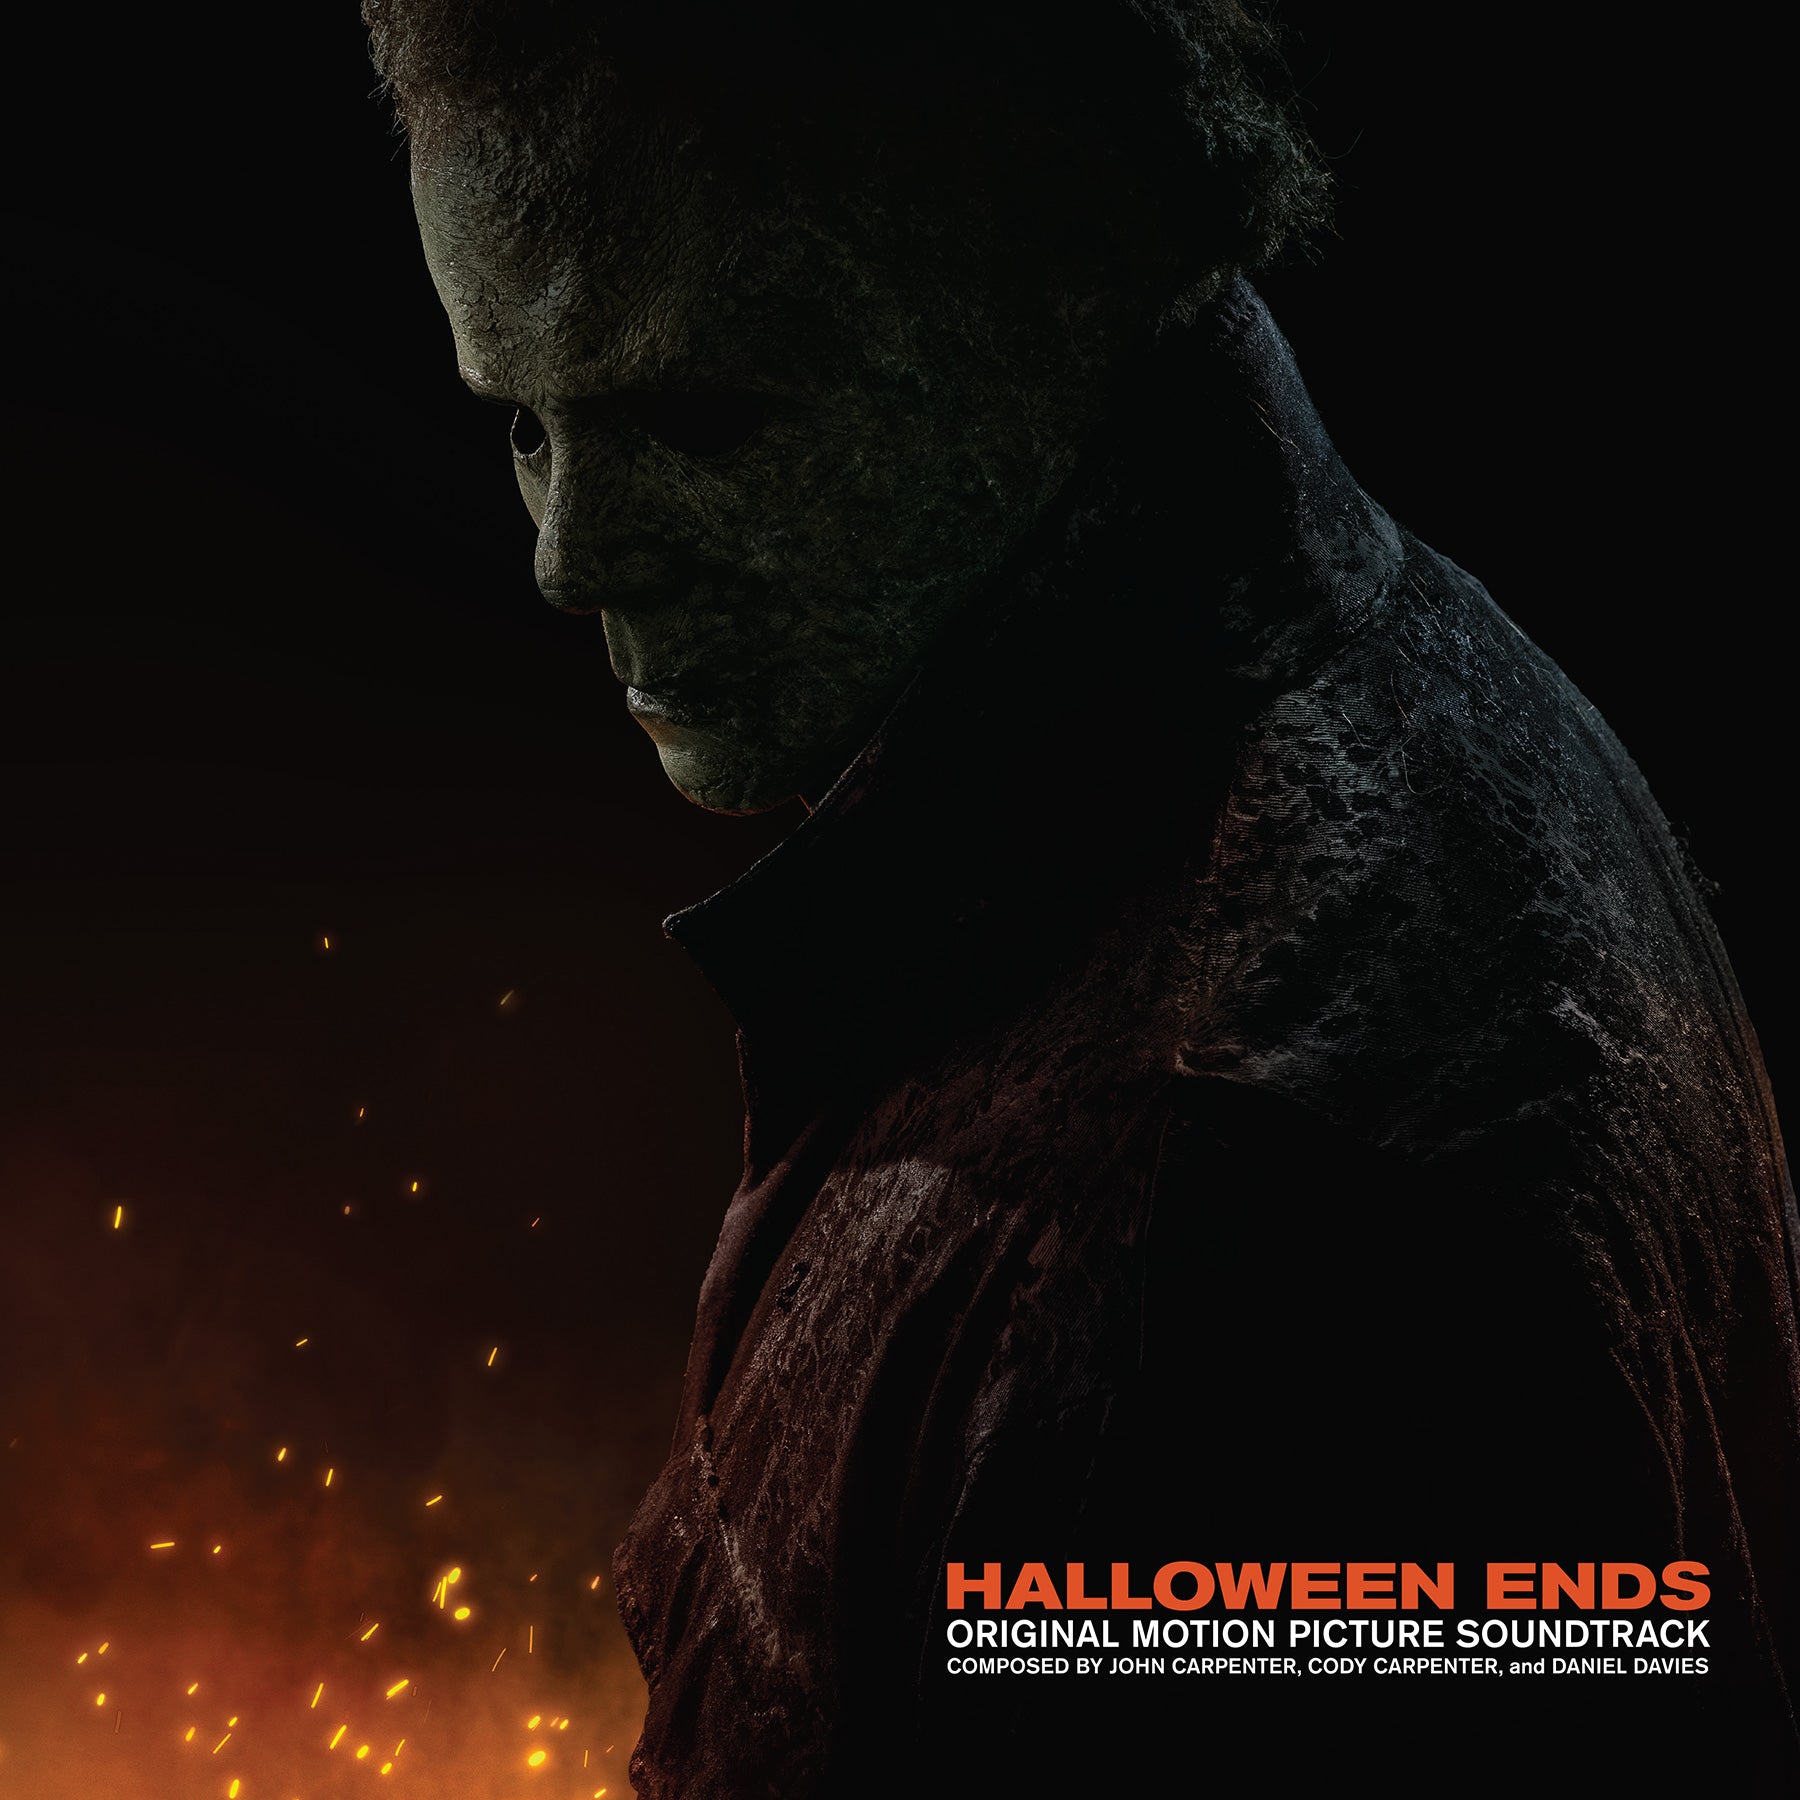 John Carpenter, Cody Carpenter, and Daniel Davies - Halloween Ends (Original Motion Picture Soundtrack)